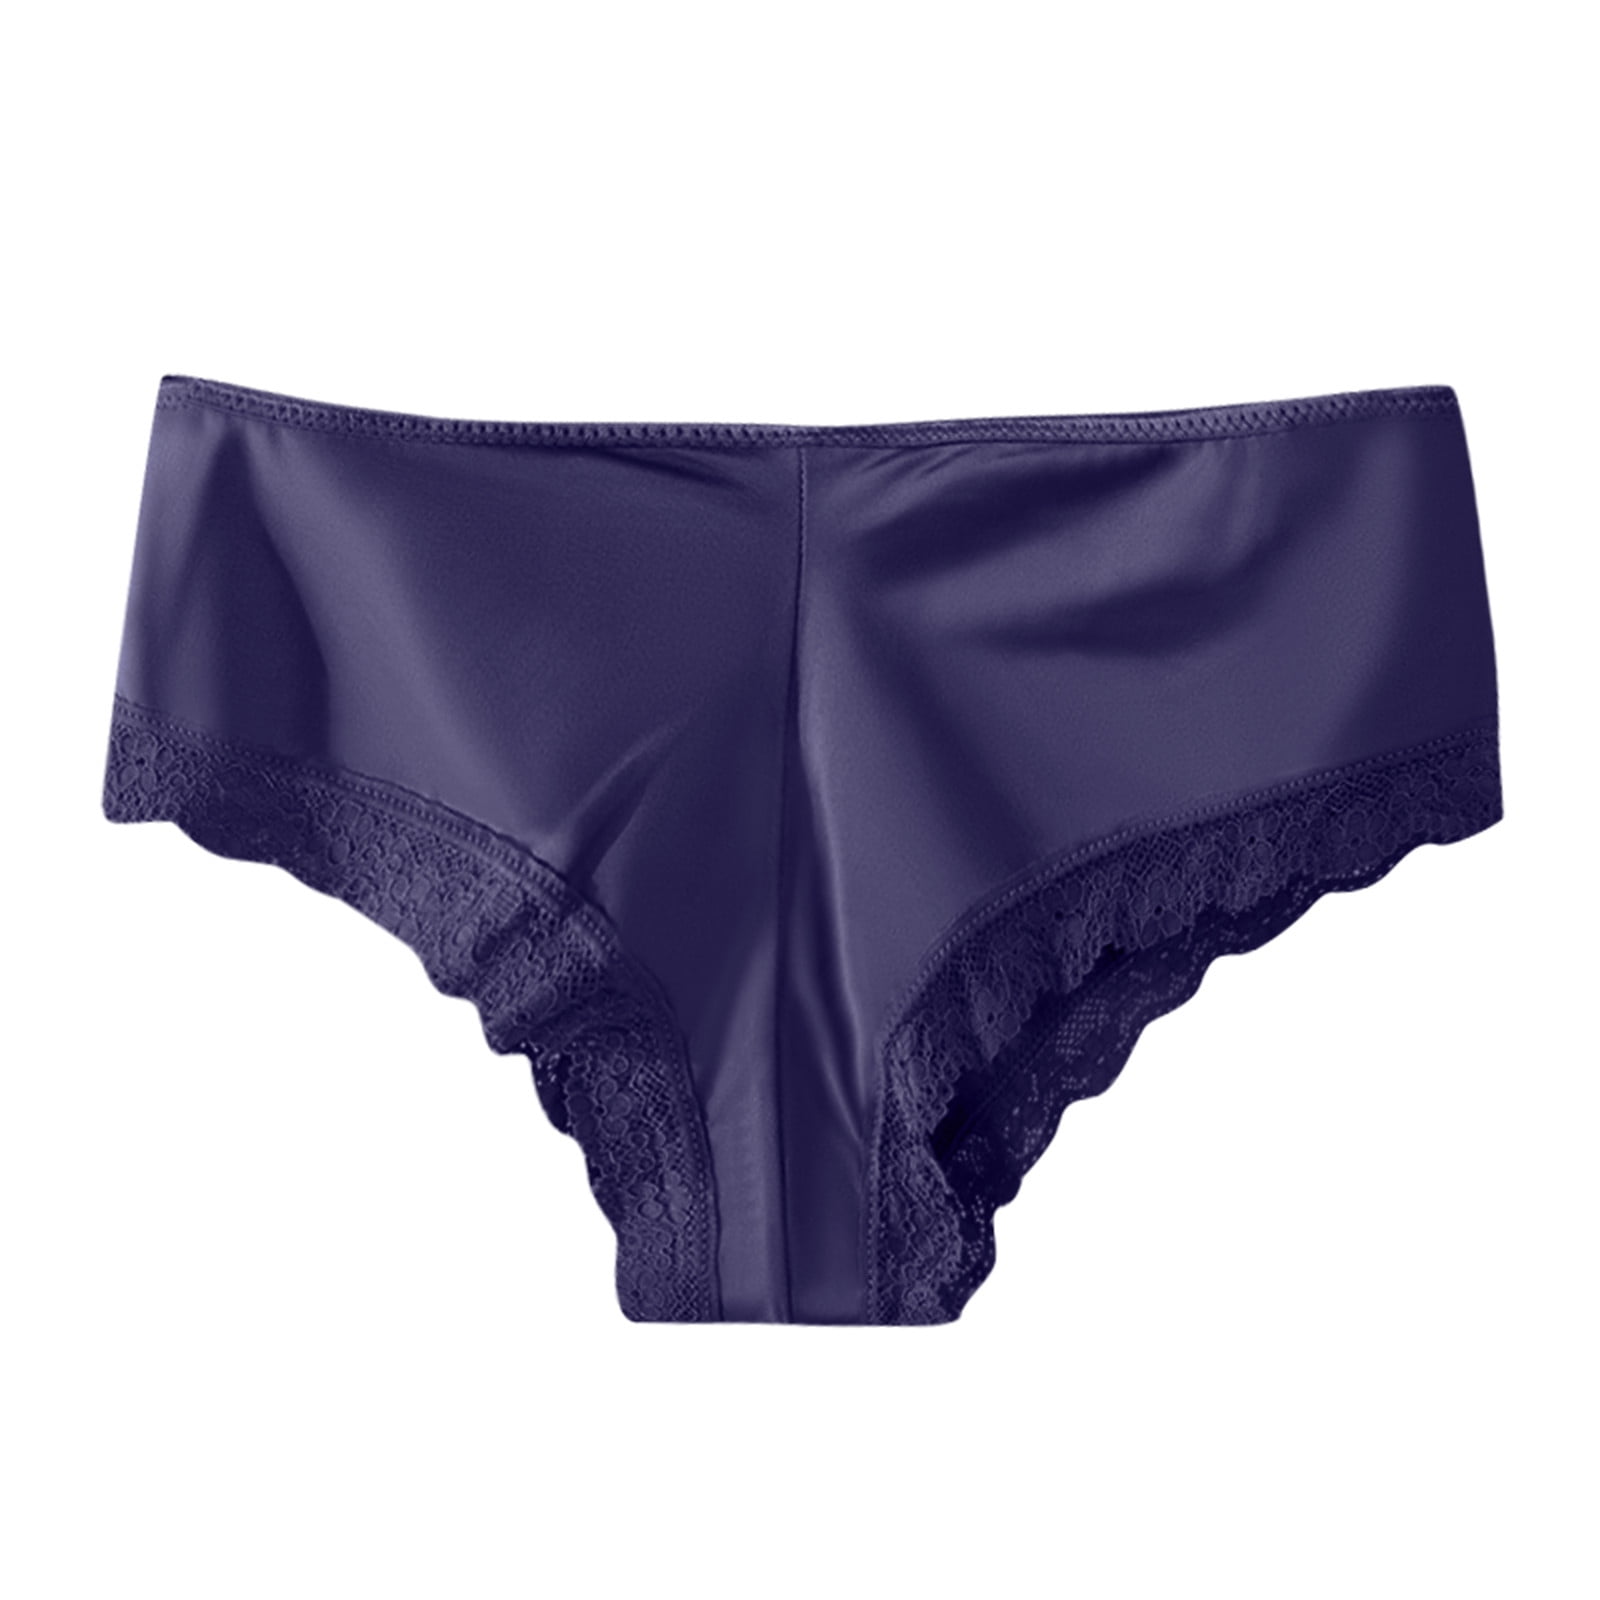 JDEFEG Latex Panties Womens Underwear Cotton Bikini Panties Lace